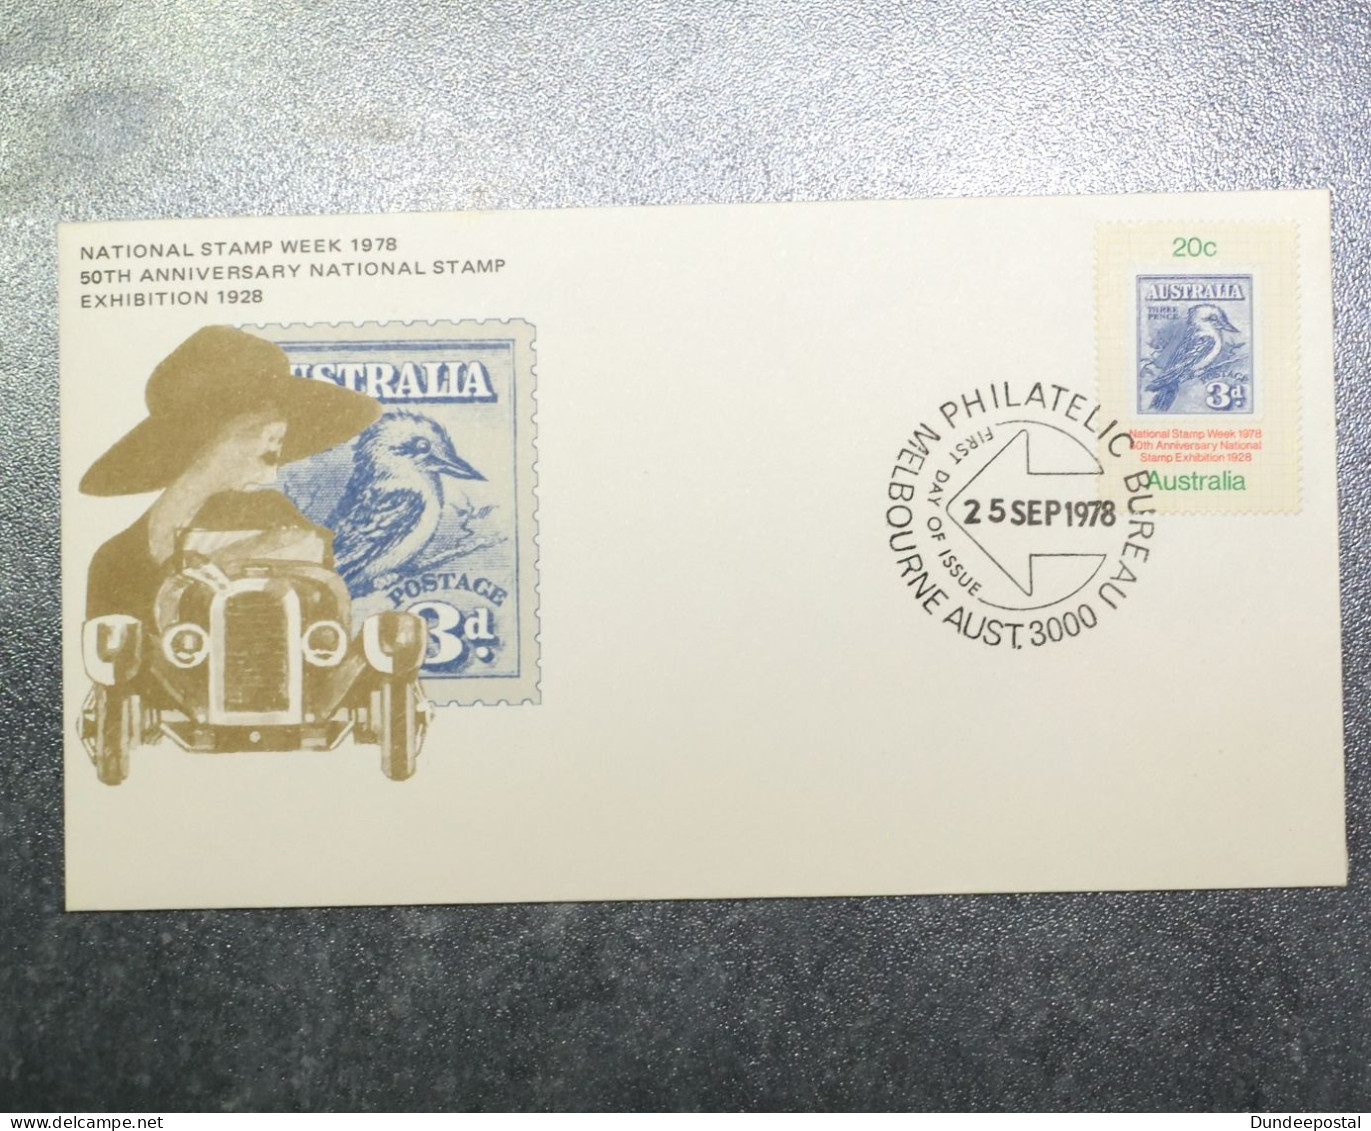 AUSTRALIA  First Day Cover  Stamp Week Single 1978  ~~L@@K~~ - Storia Postale